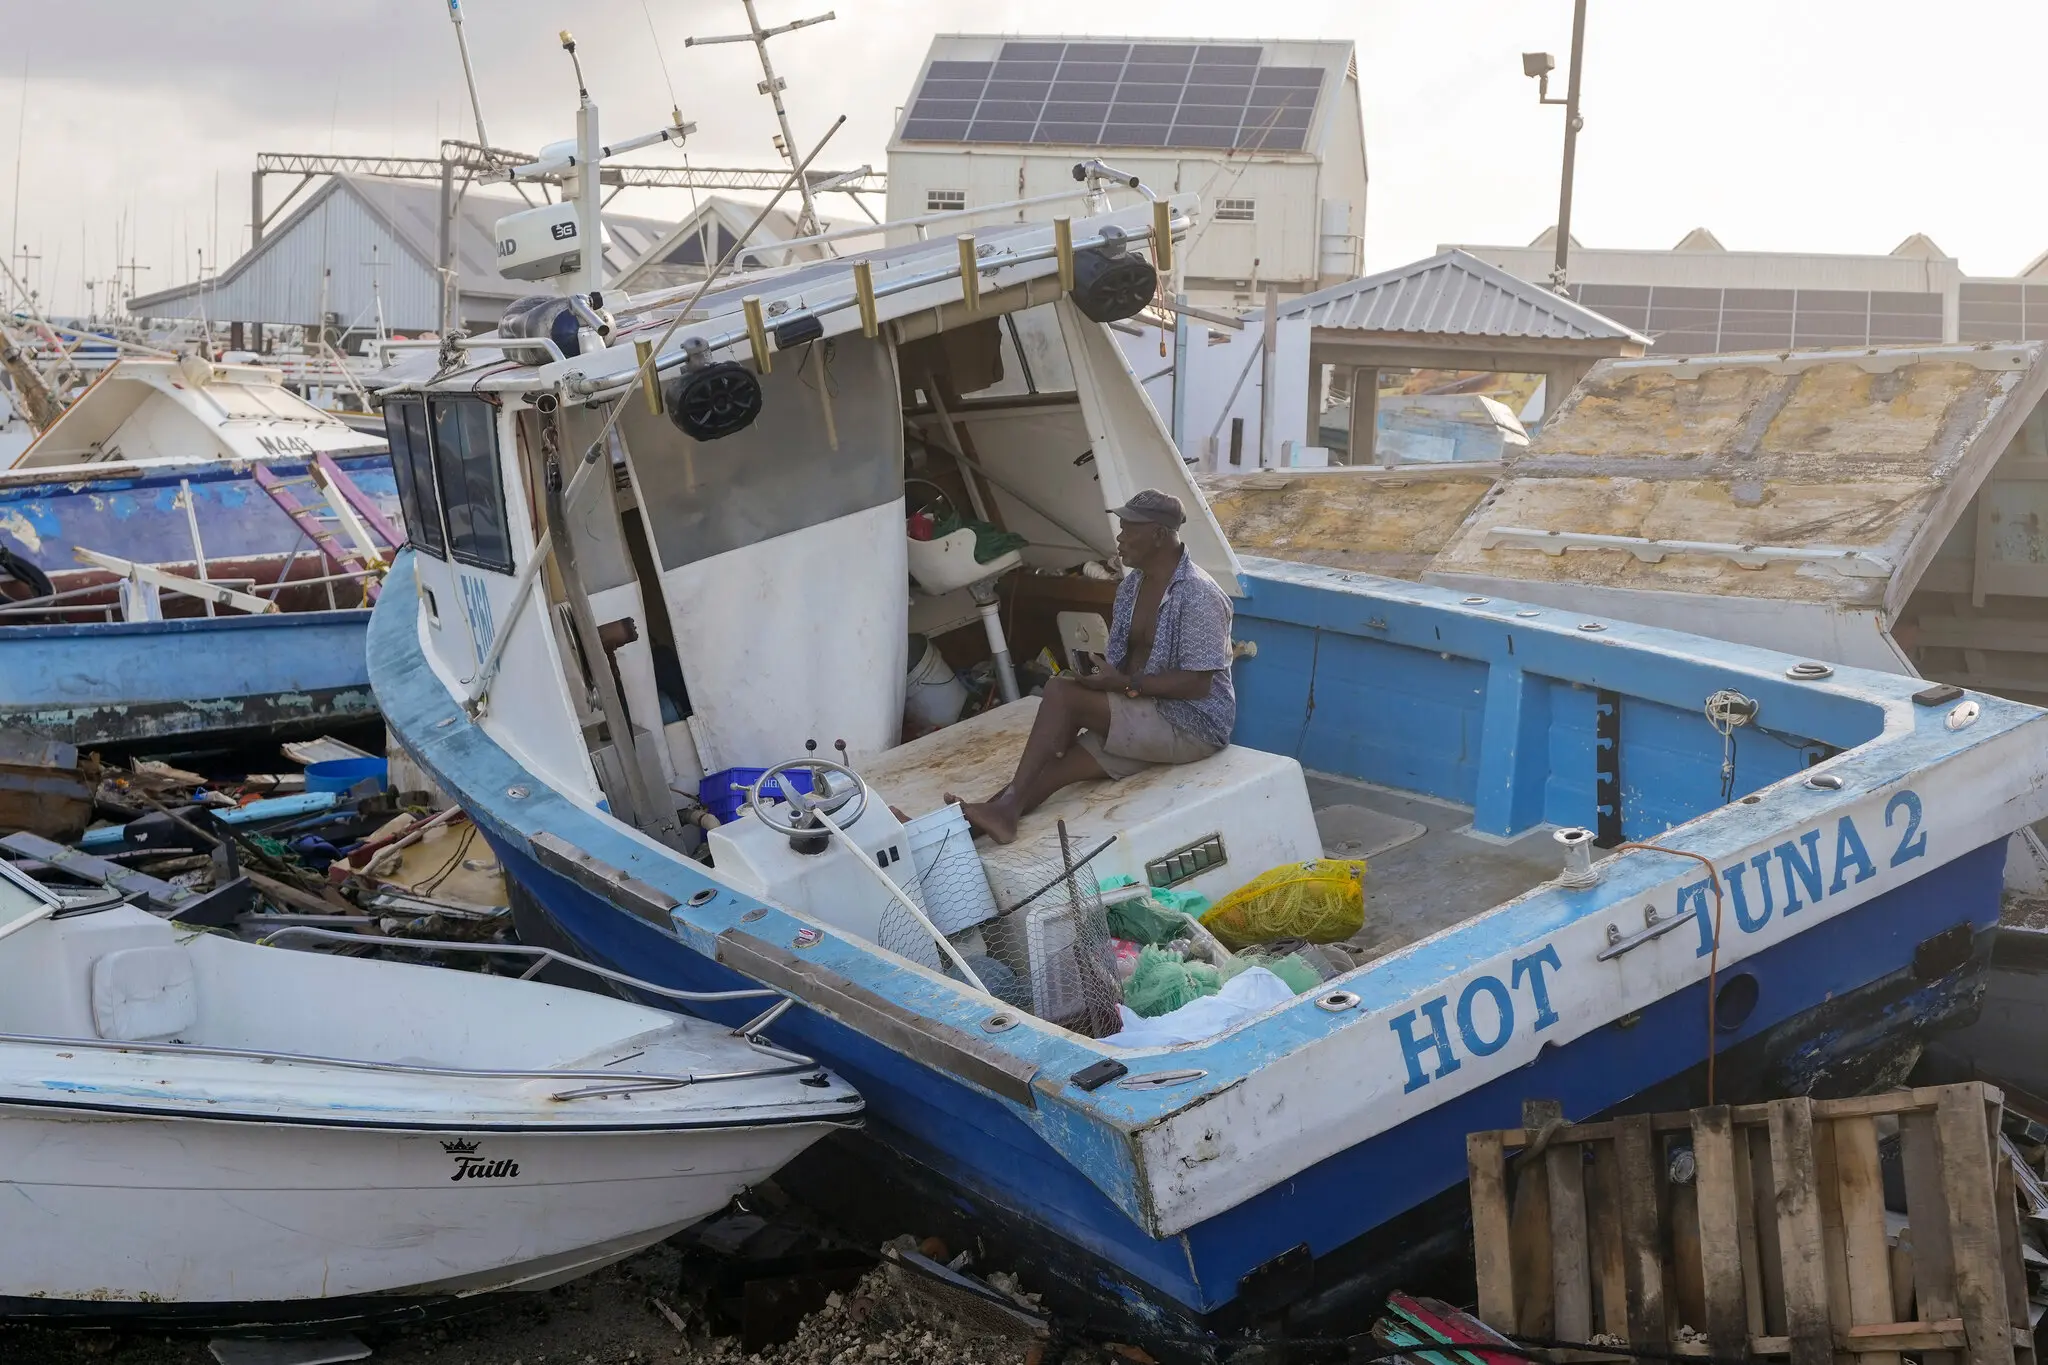 Category 5 Hurricane Beryl Heads for Jamaica After Devastating the Caribbean